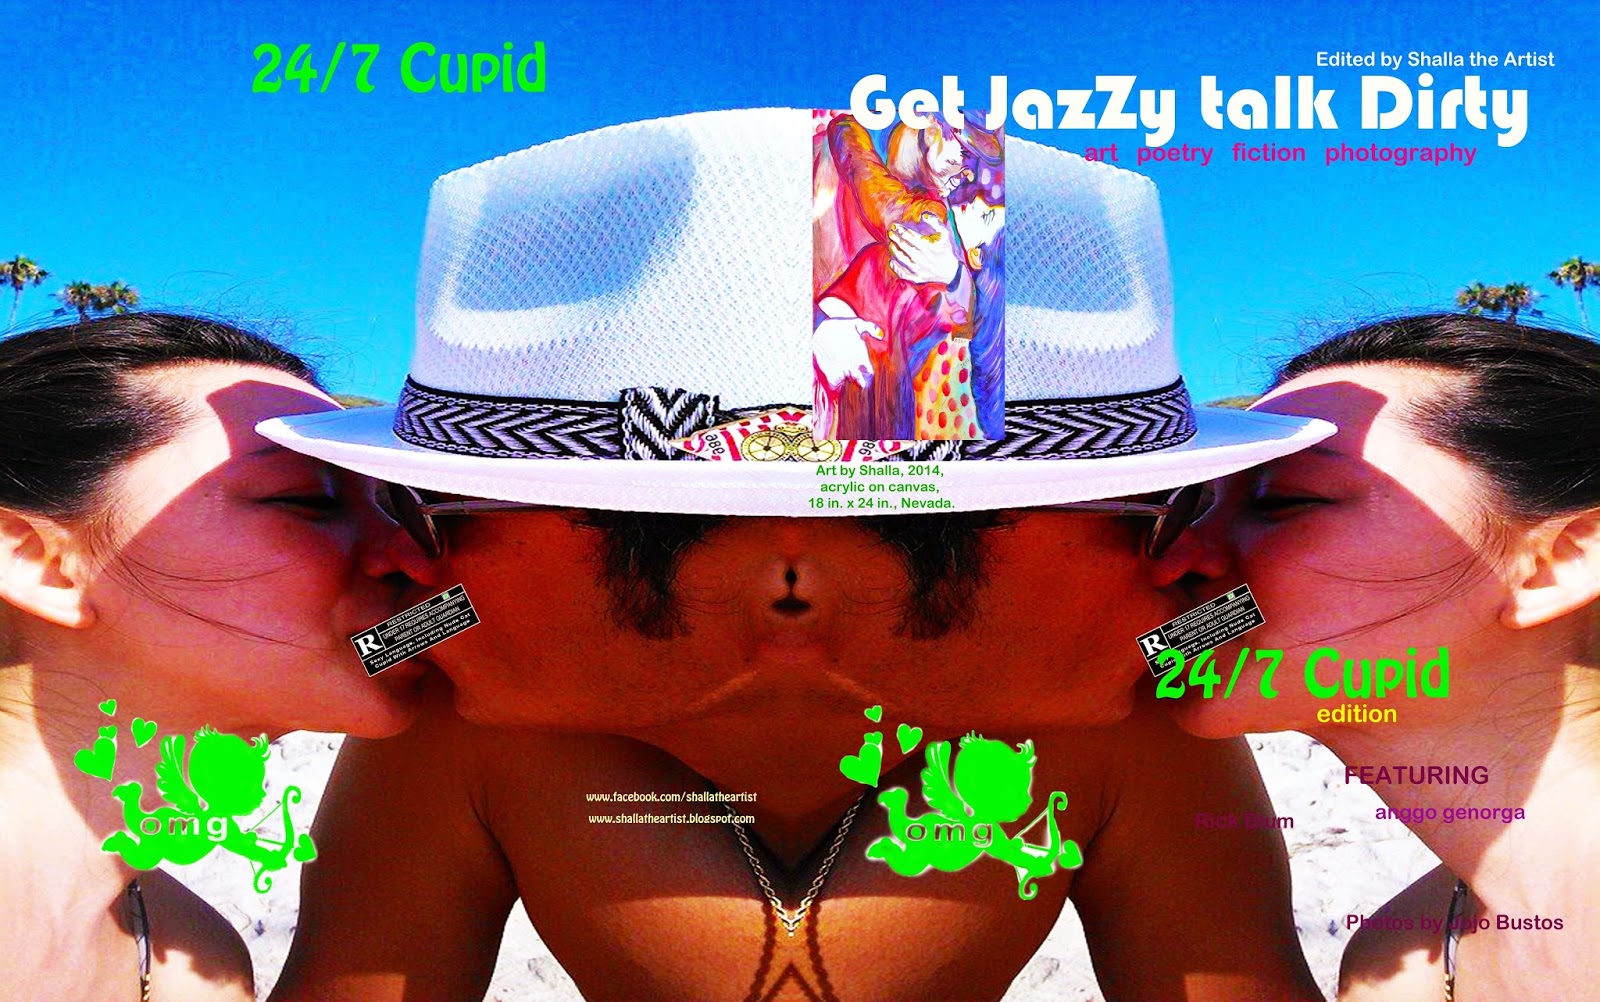 http://getjazzytalkdirty.blogspot.com/2014/11/submission-guidelines-get-jazzy-talk.html